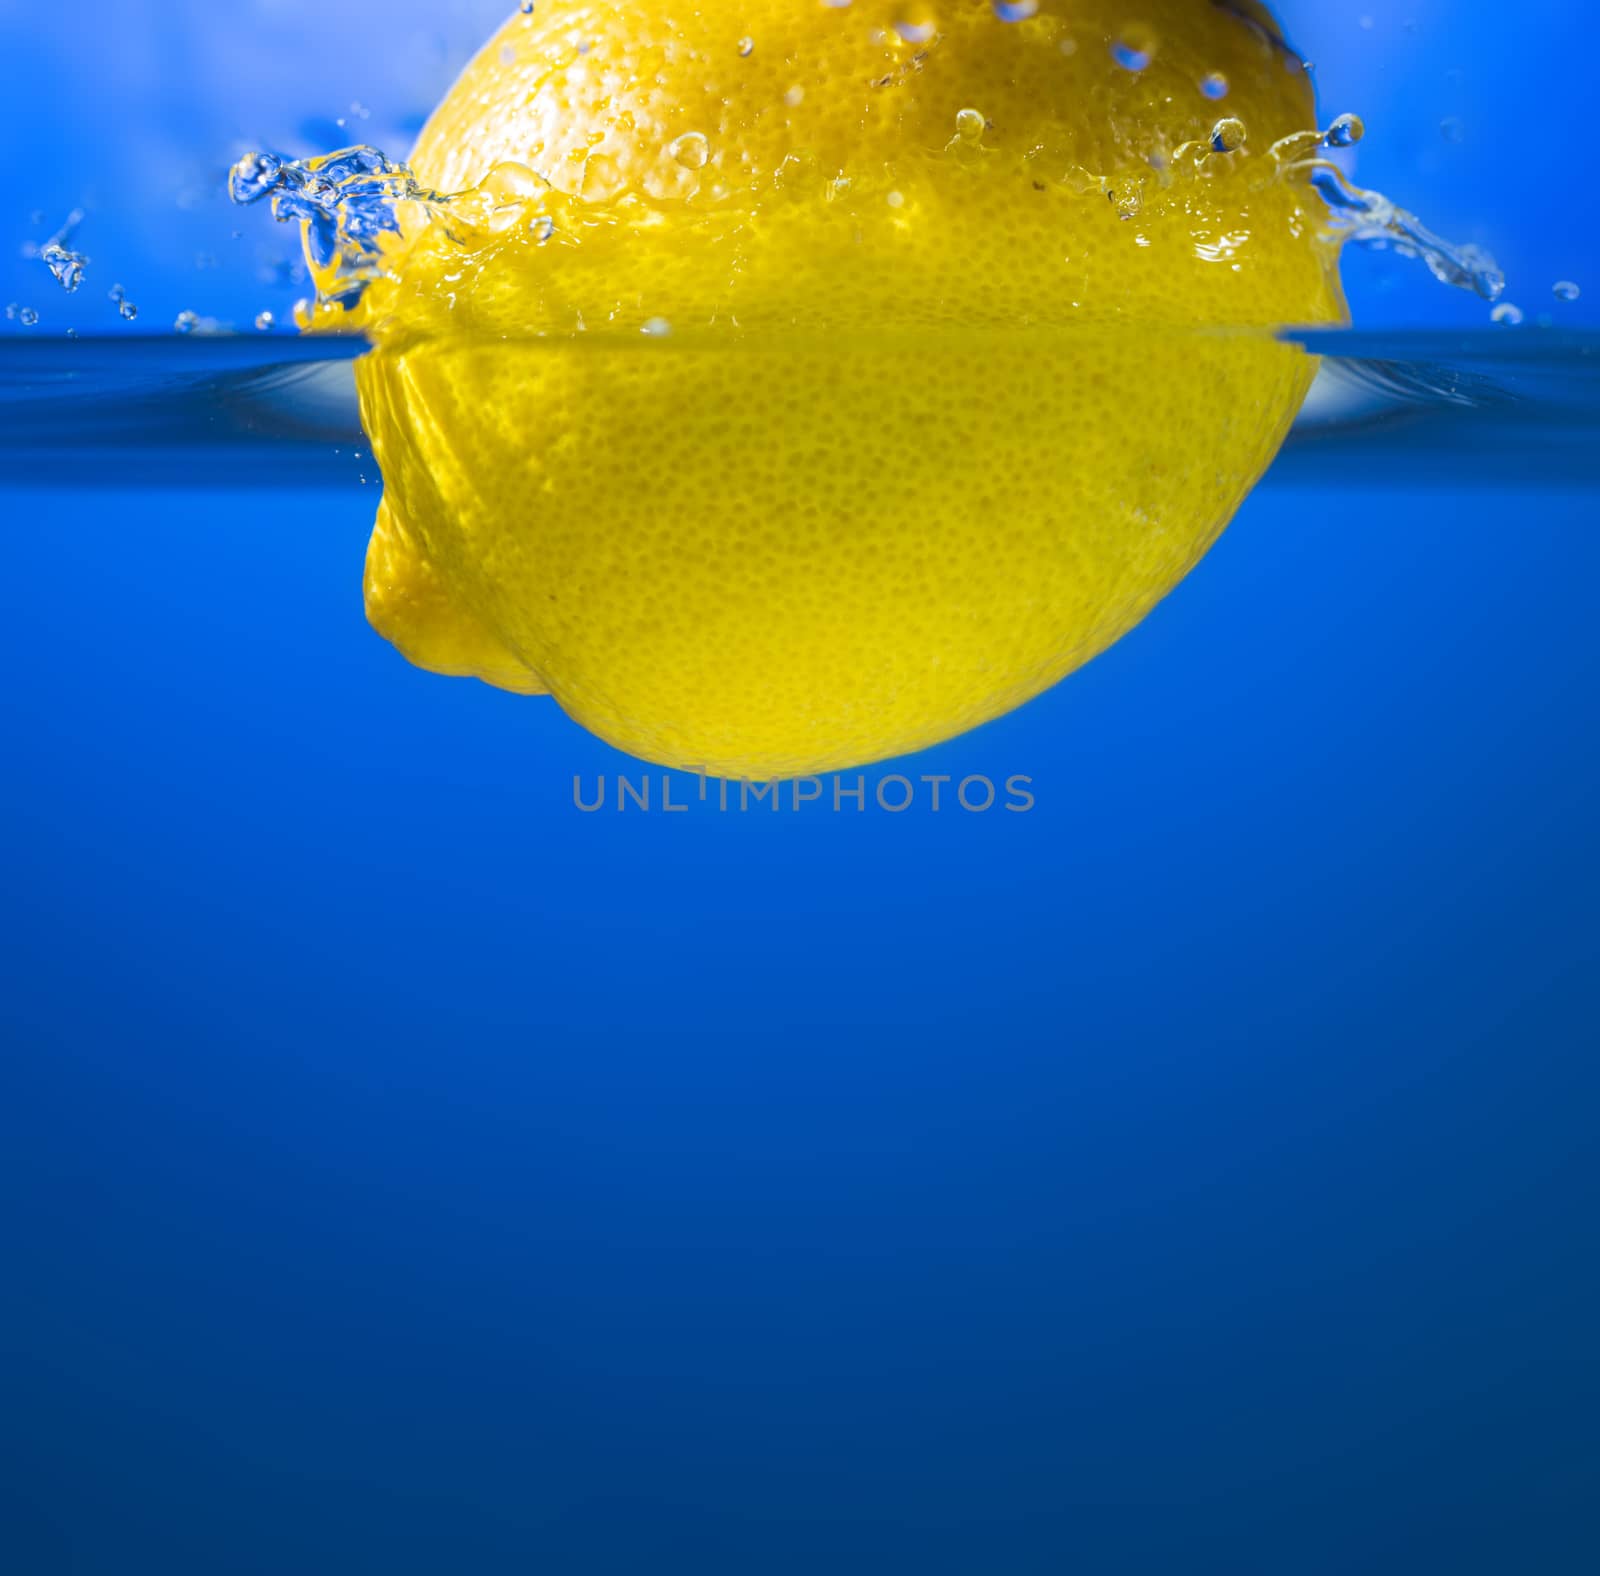 Yellow lemon in water splash by Garsya